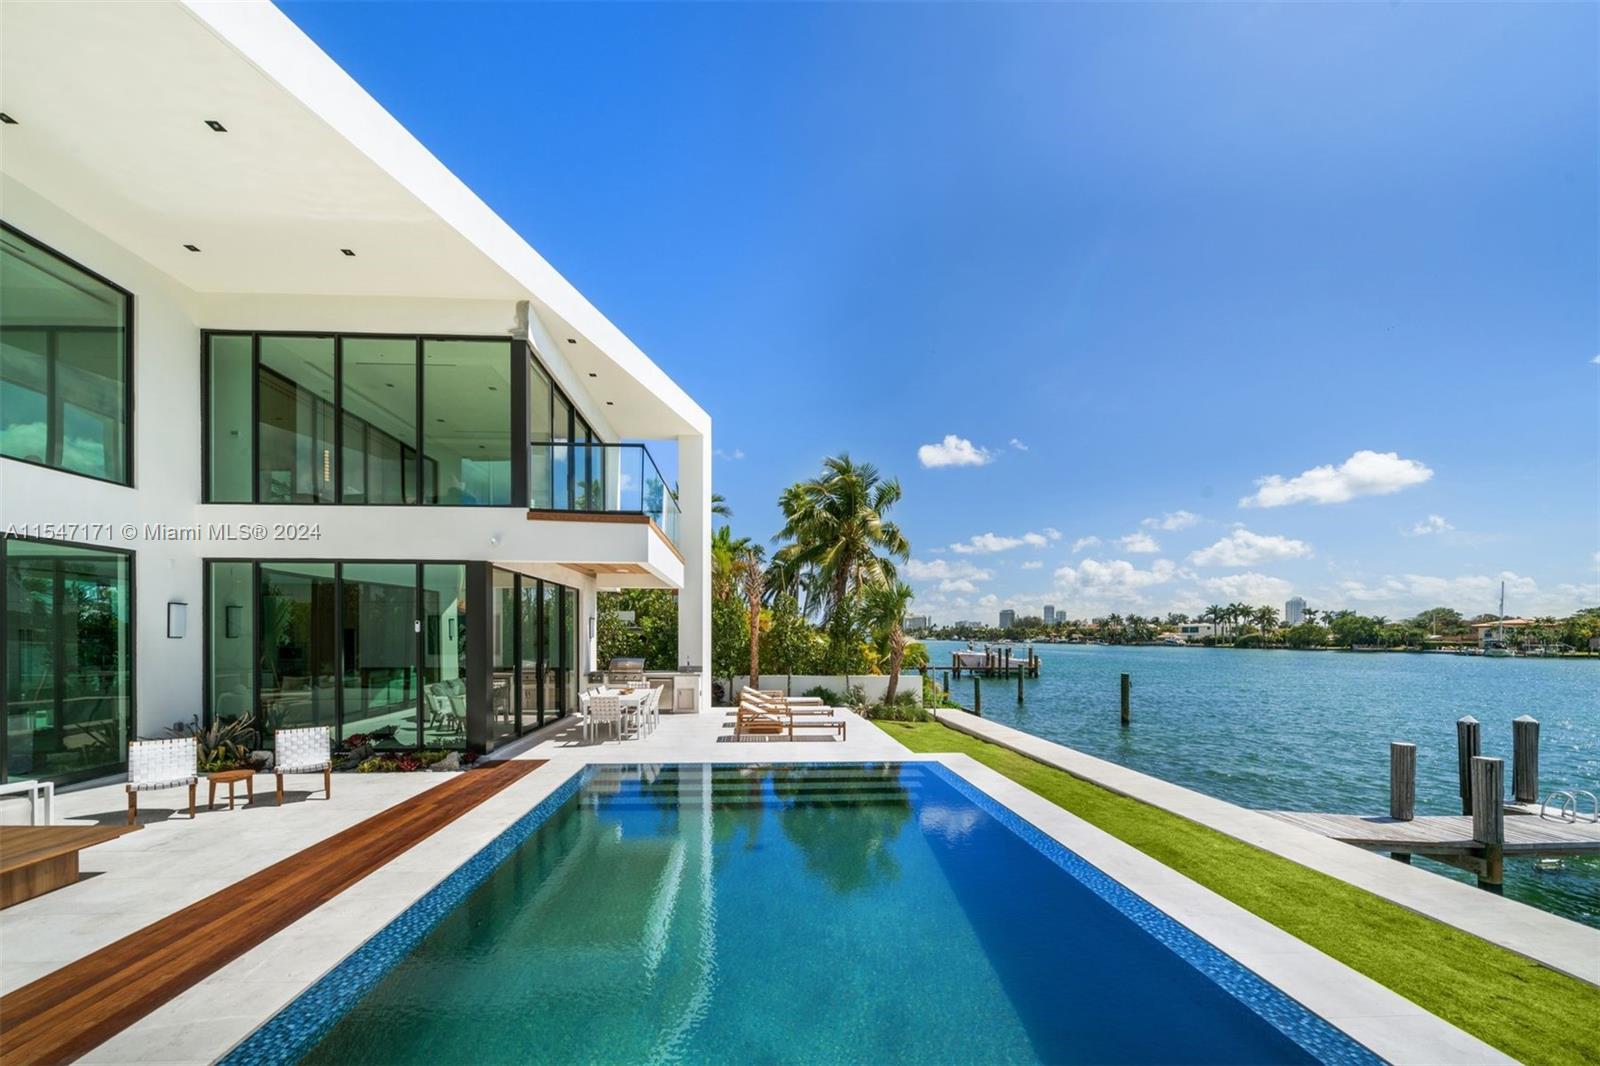 Property for Sale at 1800 Daytonia Rd, Miami Beach, Miami-Dade County, Florida - Bedrooms: 7 
Bathrooms: 8  - $13,500,000